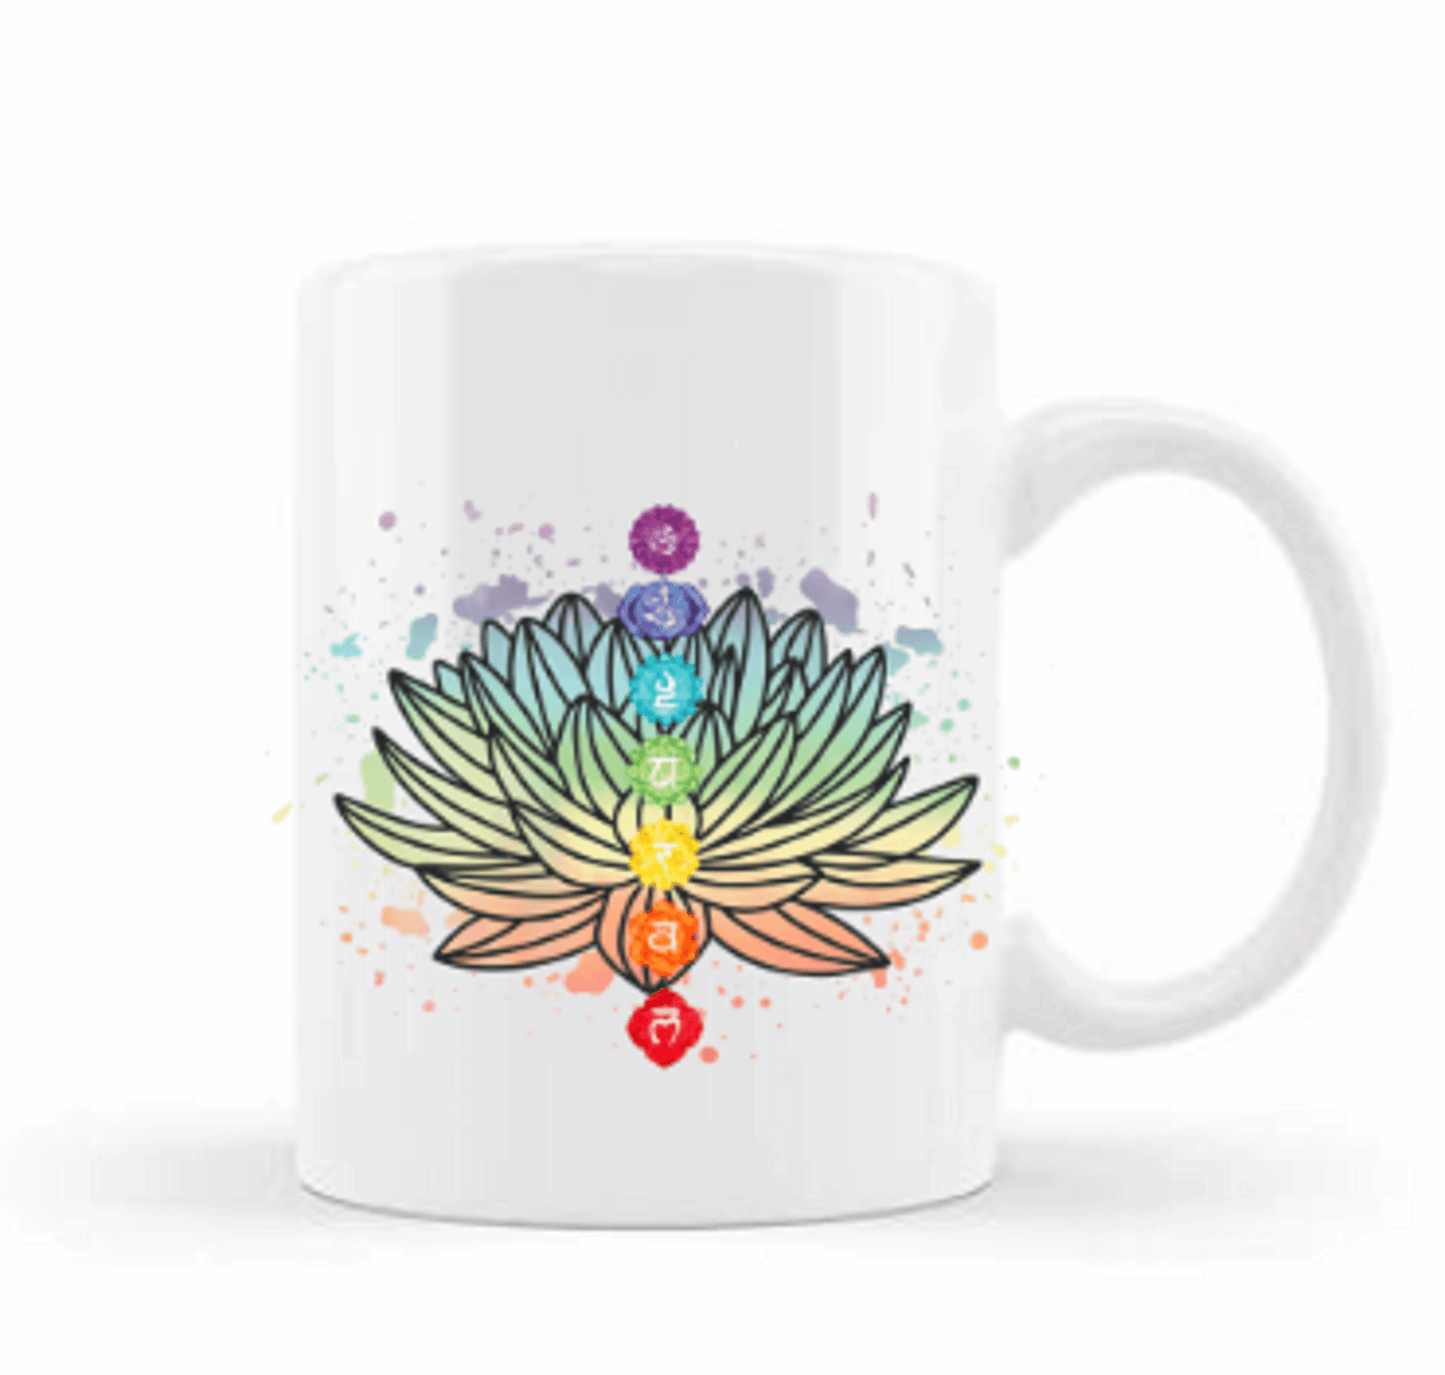  Chakra's Hippy Coffee Mug by Free Spirit Accessories sold by Free Spirit Accessories